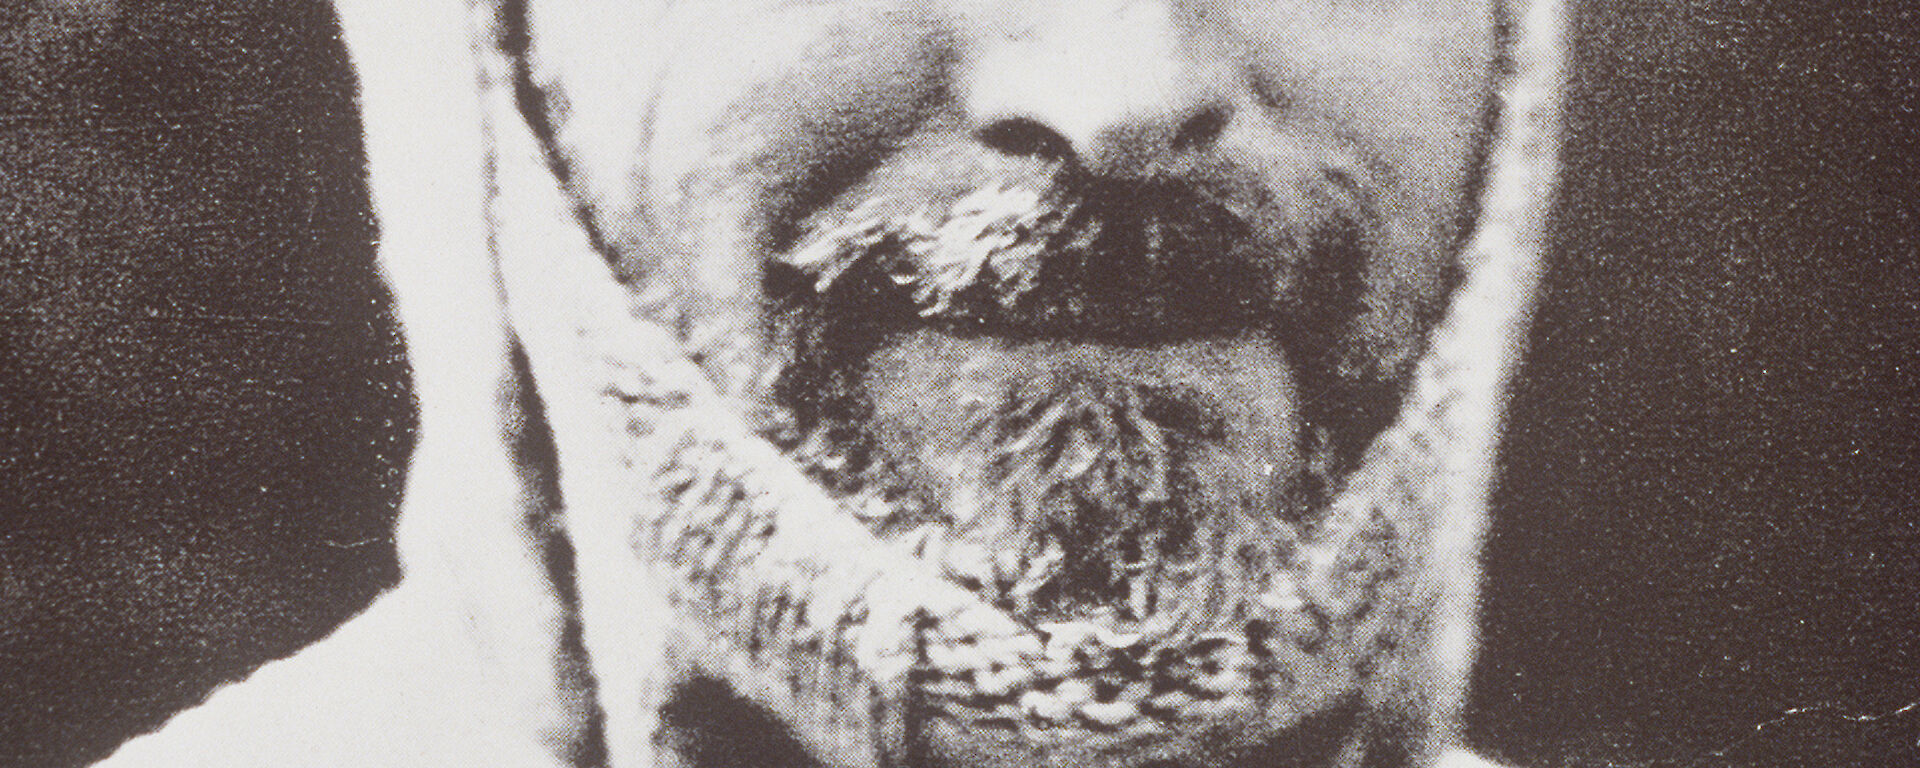 Sir Douglas Mawson in his iconic balaclava.